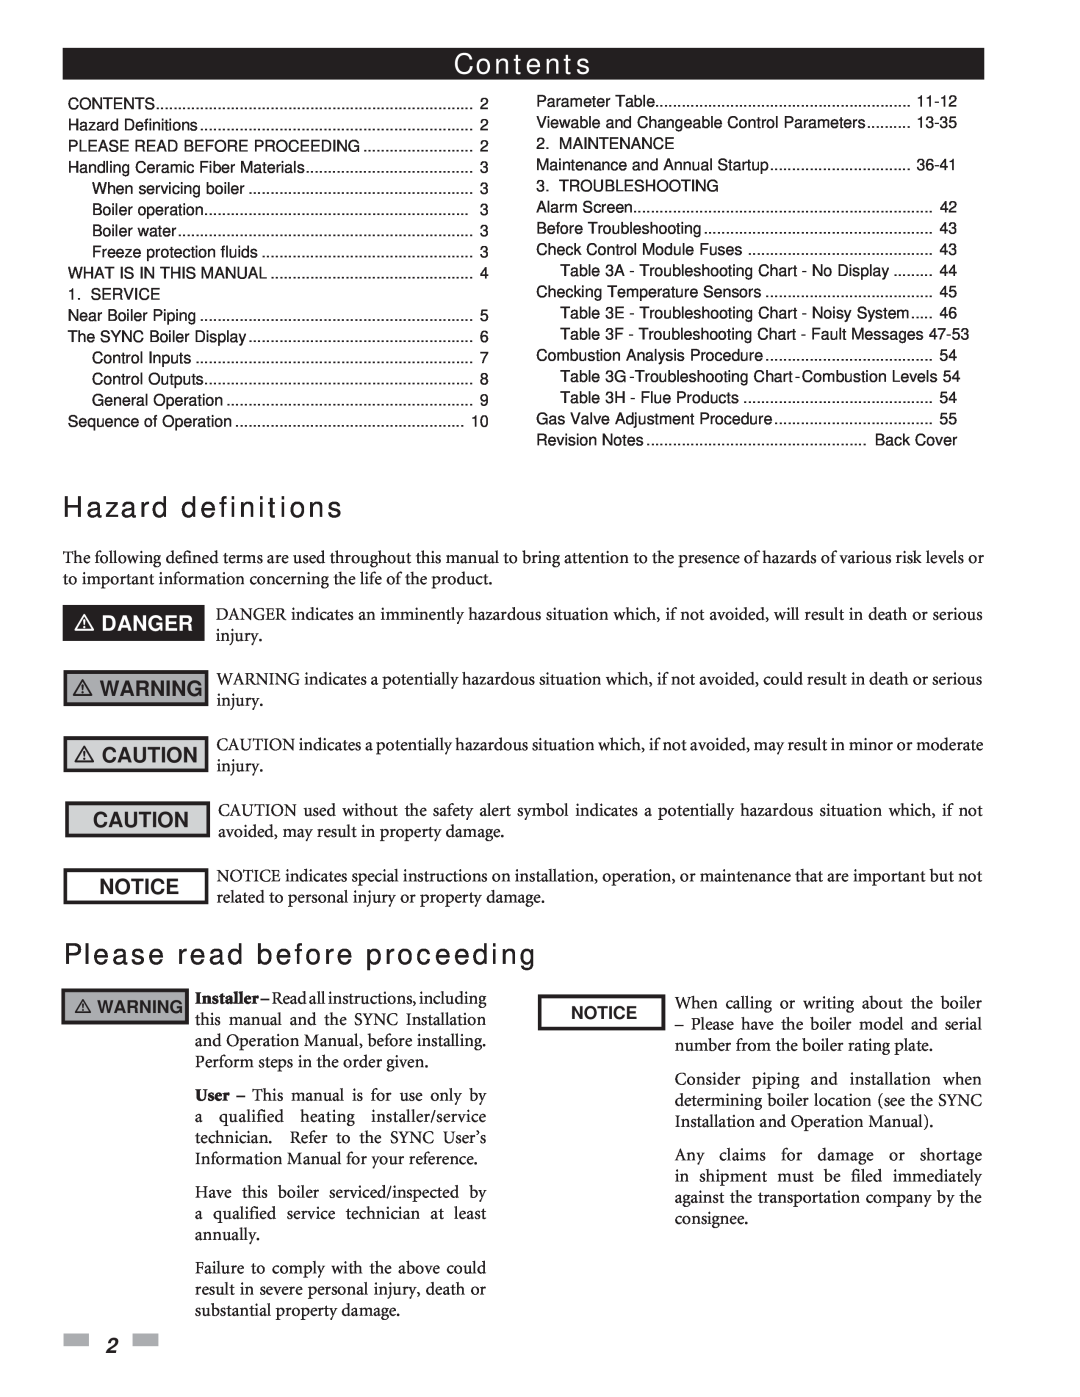 Lochinvar 1.3 service manual Hazard definitions, Please read before proceeding, Danger, Notice, Contents 